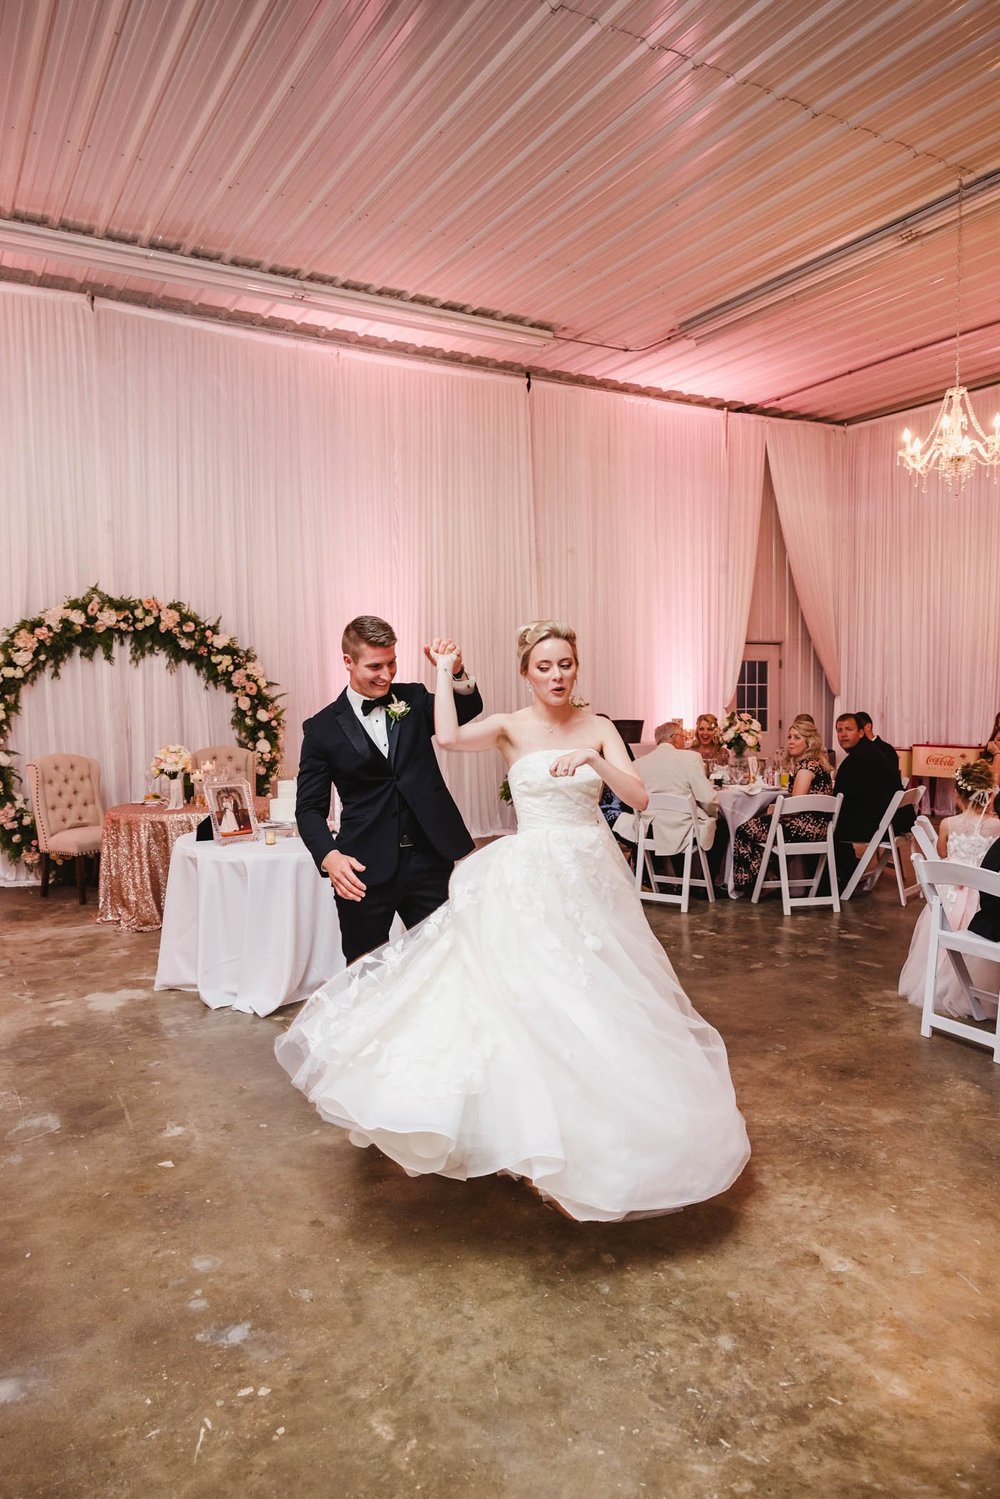 Bride spins on dancefloor